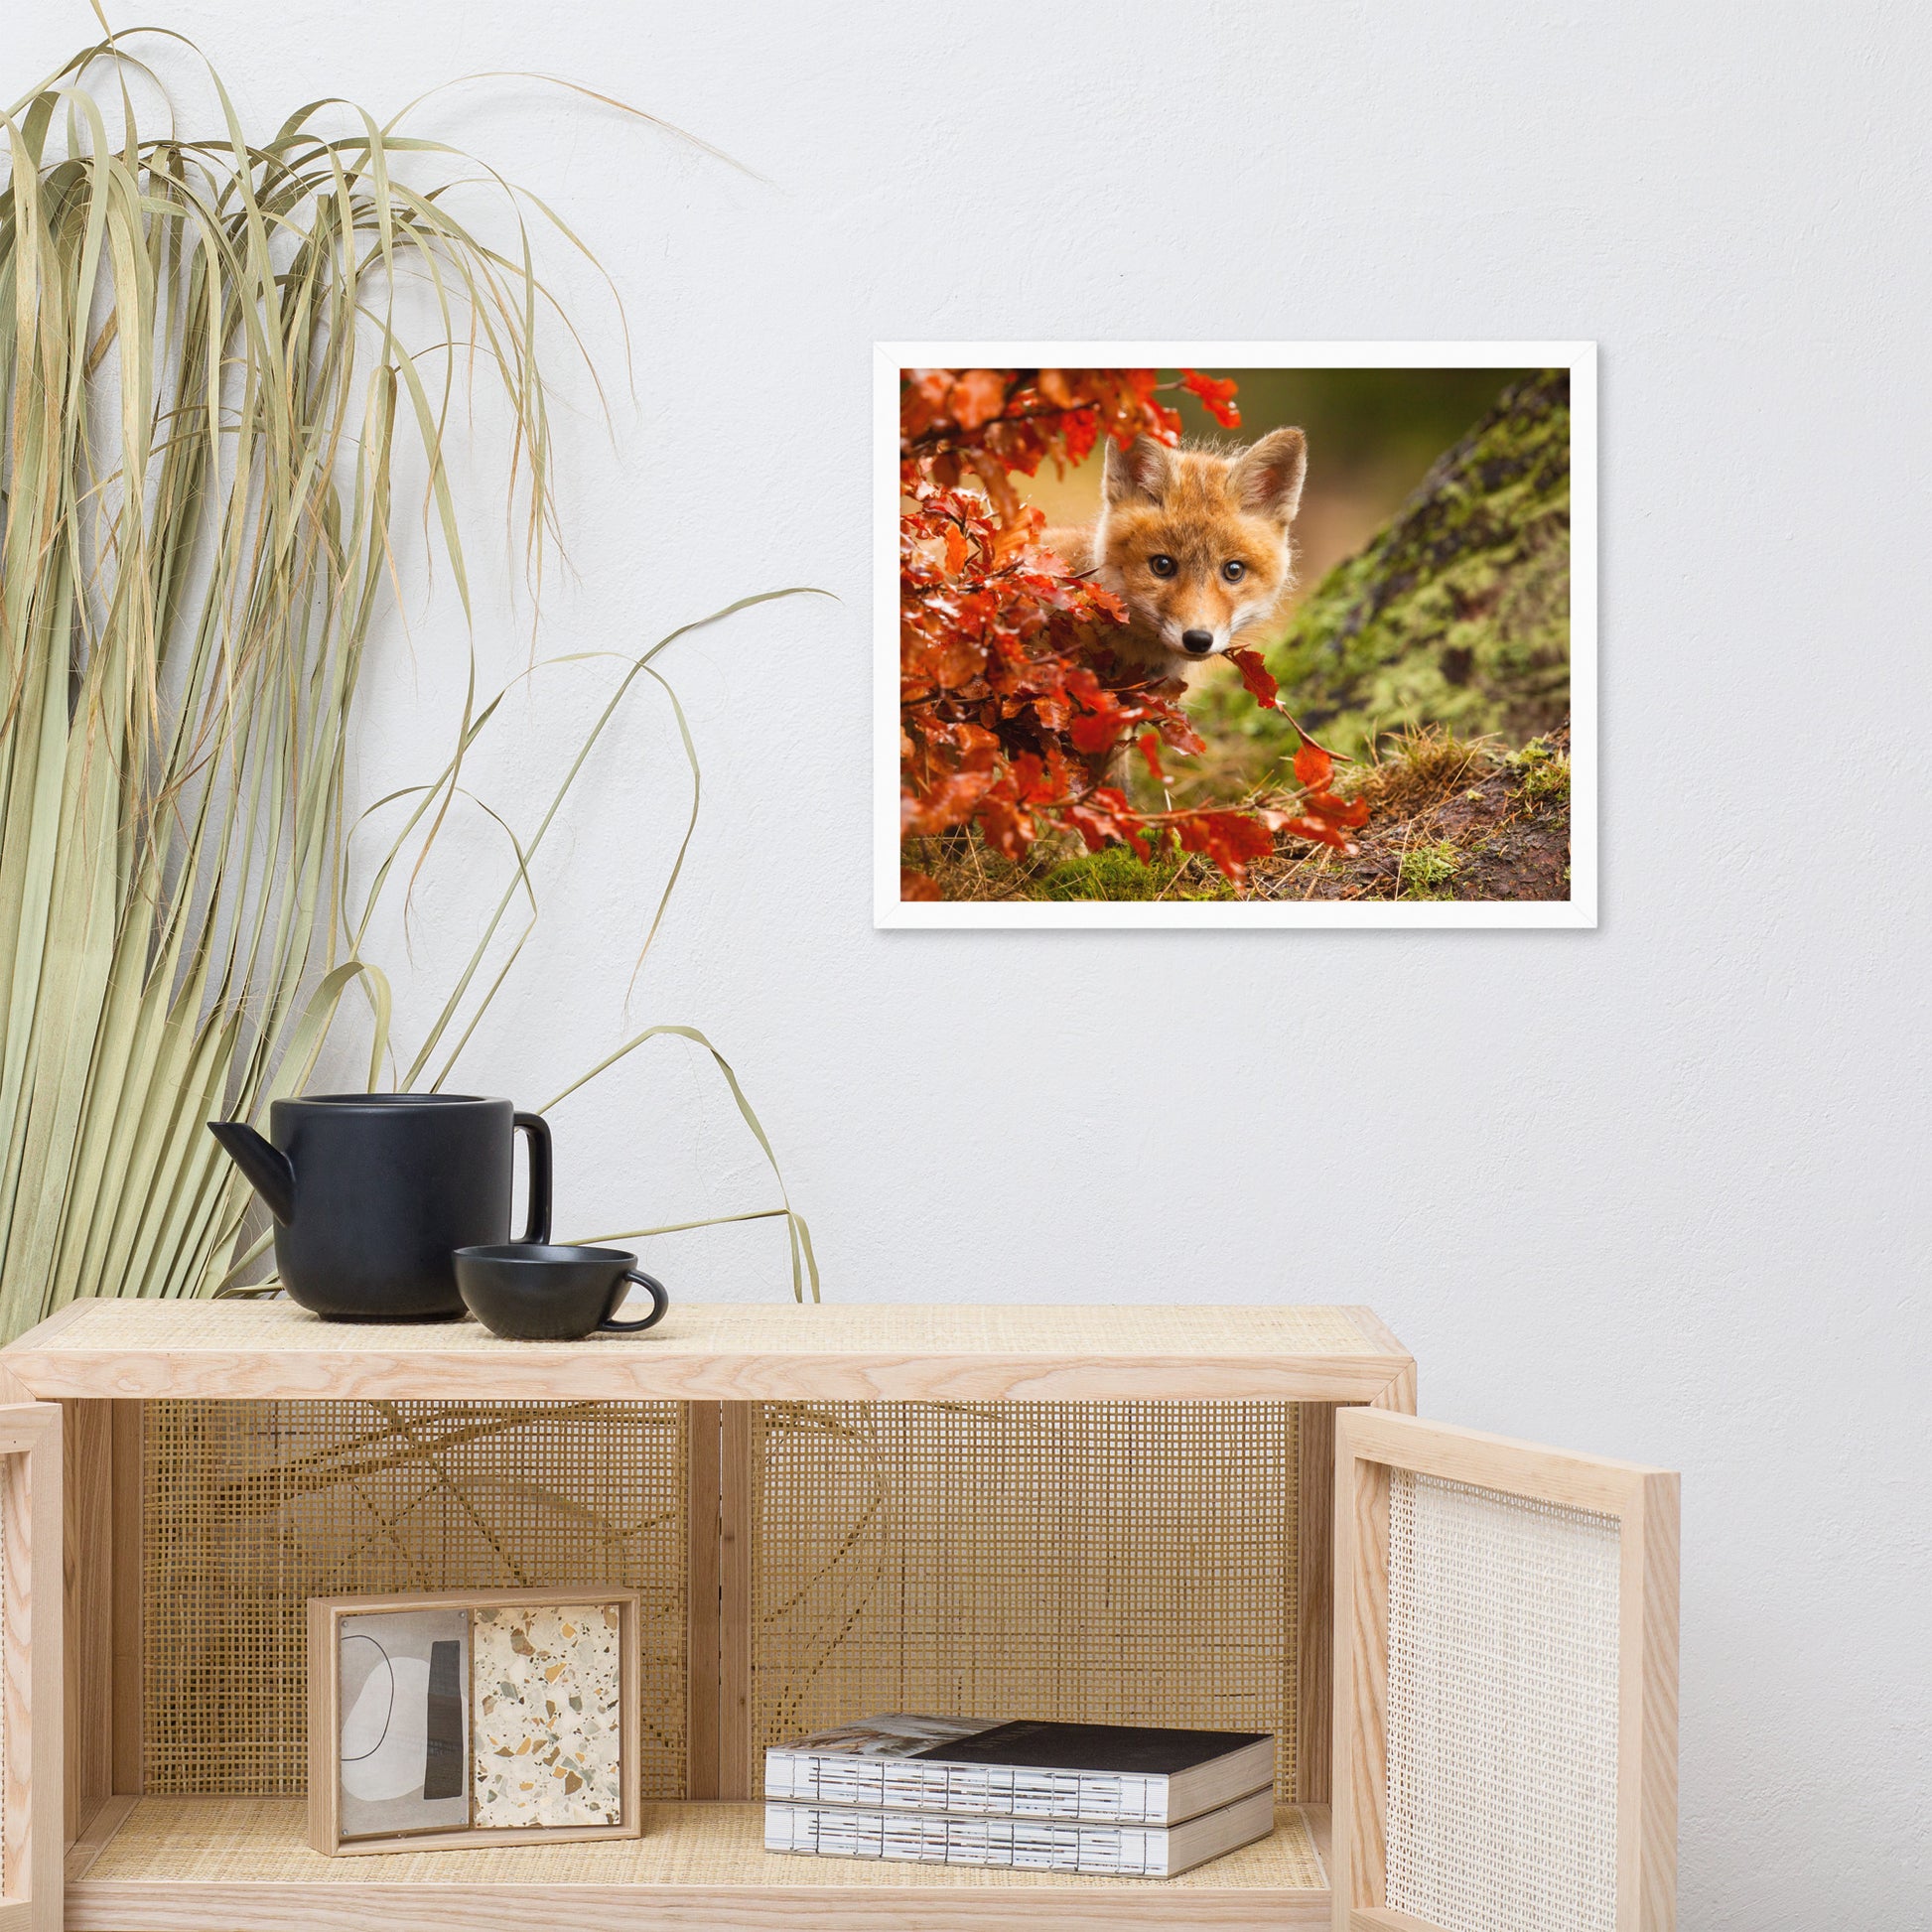 Nursery Art Framed: Peek-A-Boo Baby Fox Pup And Fall Leaves - Animal / Wildlife / Nature Artwork - Wall Decor - Framed Wall Art Print